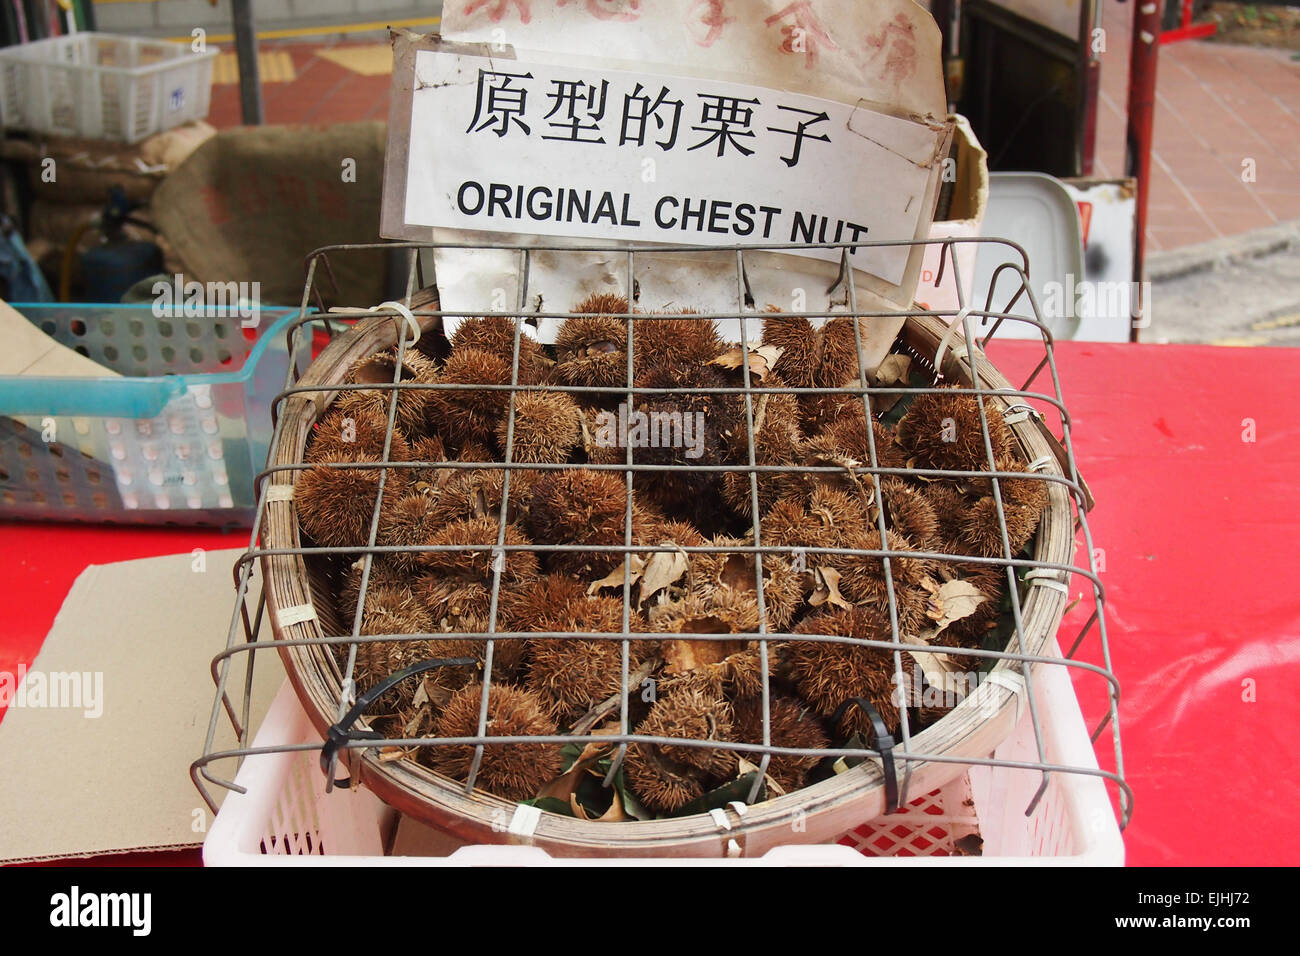 Original chestnut, street food at china town Stock Photo